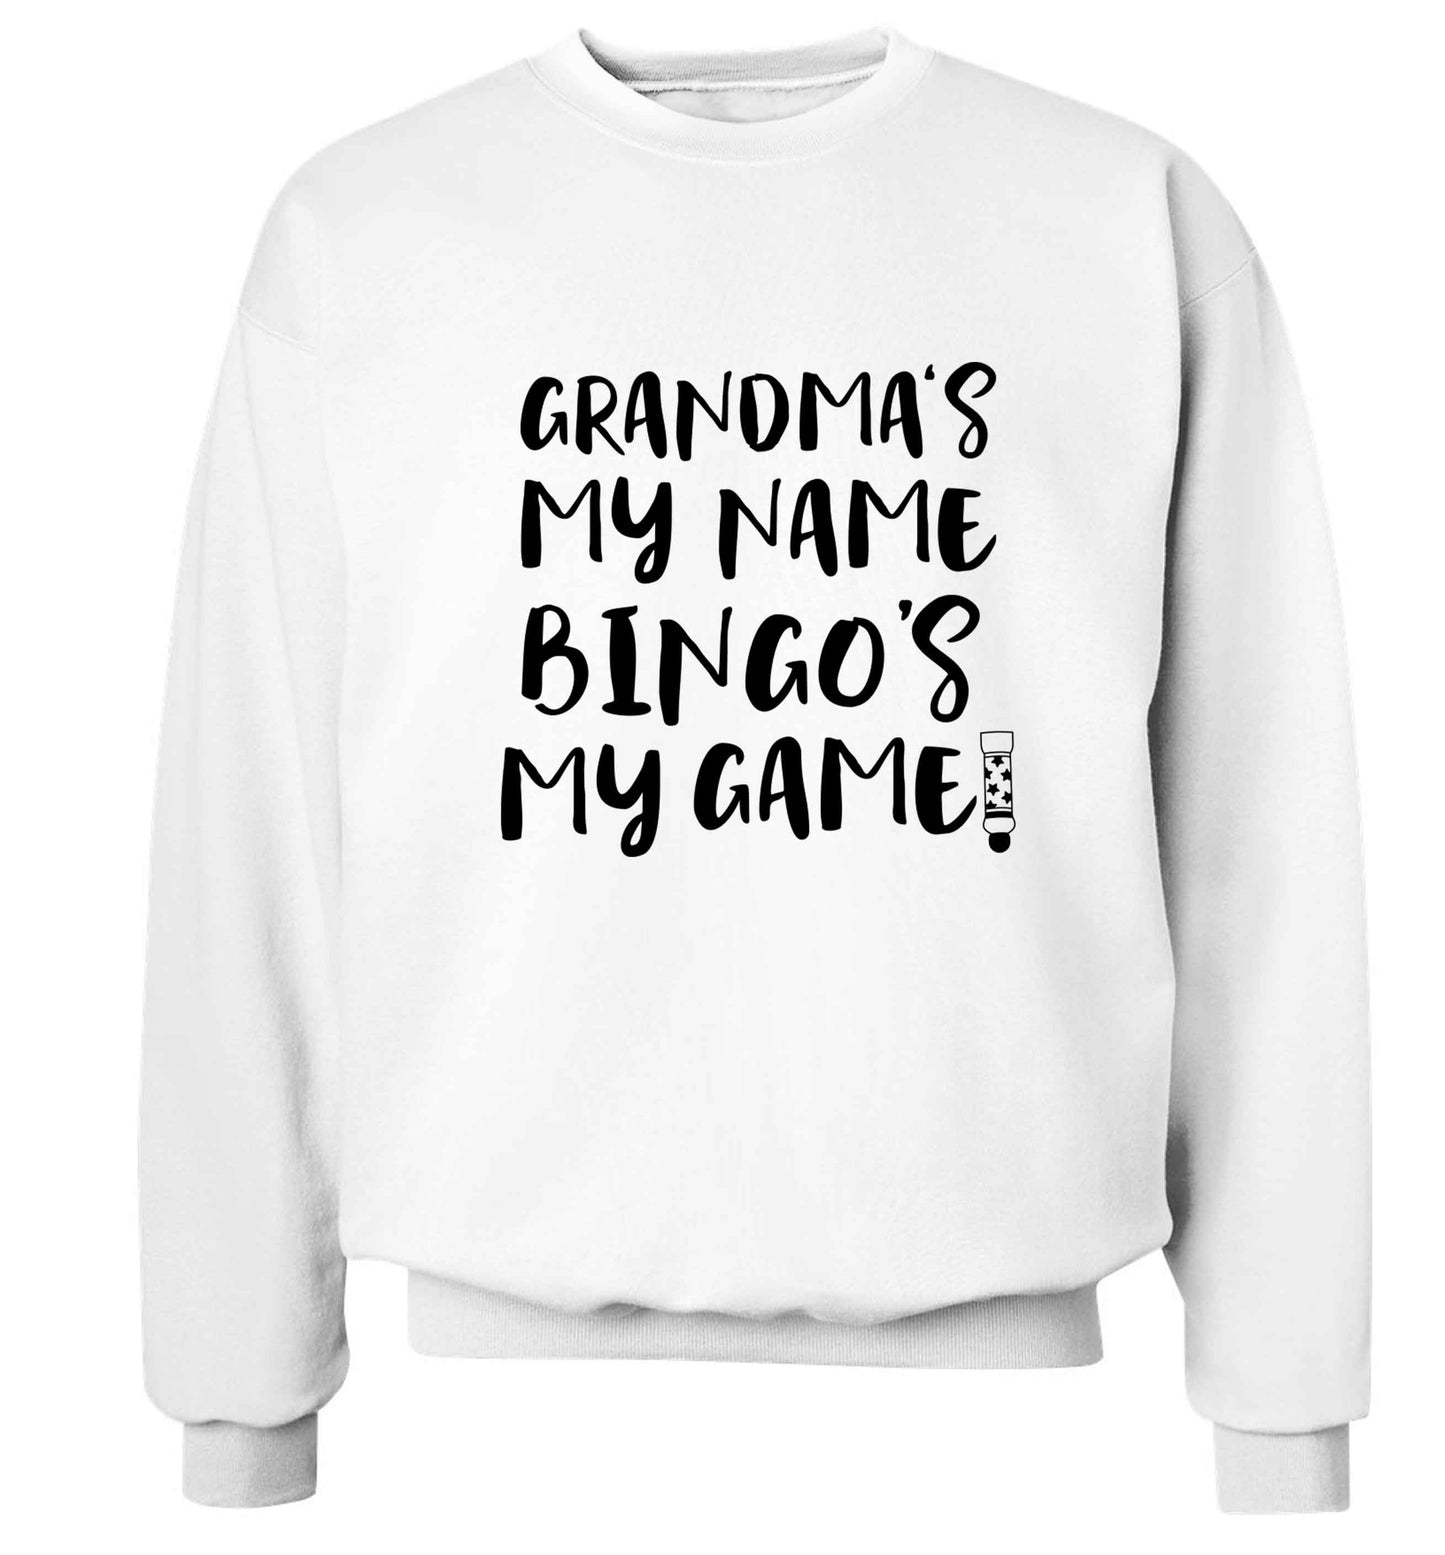 Grandma's my name bingo's my game! Adult's unisex white Sweater 2XL